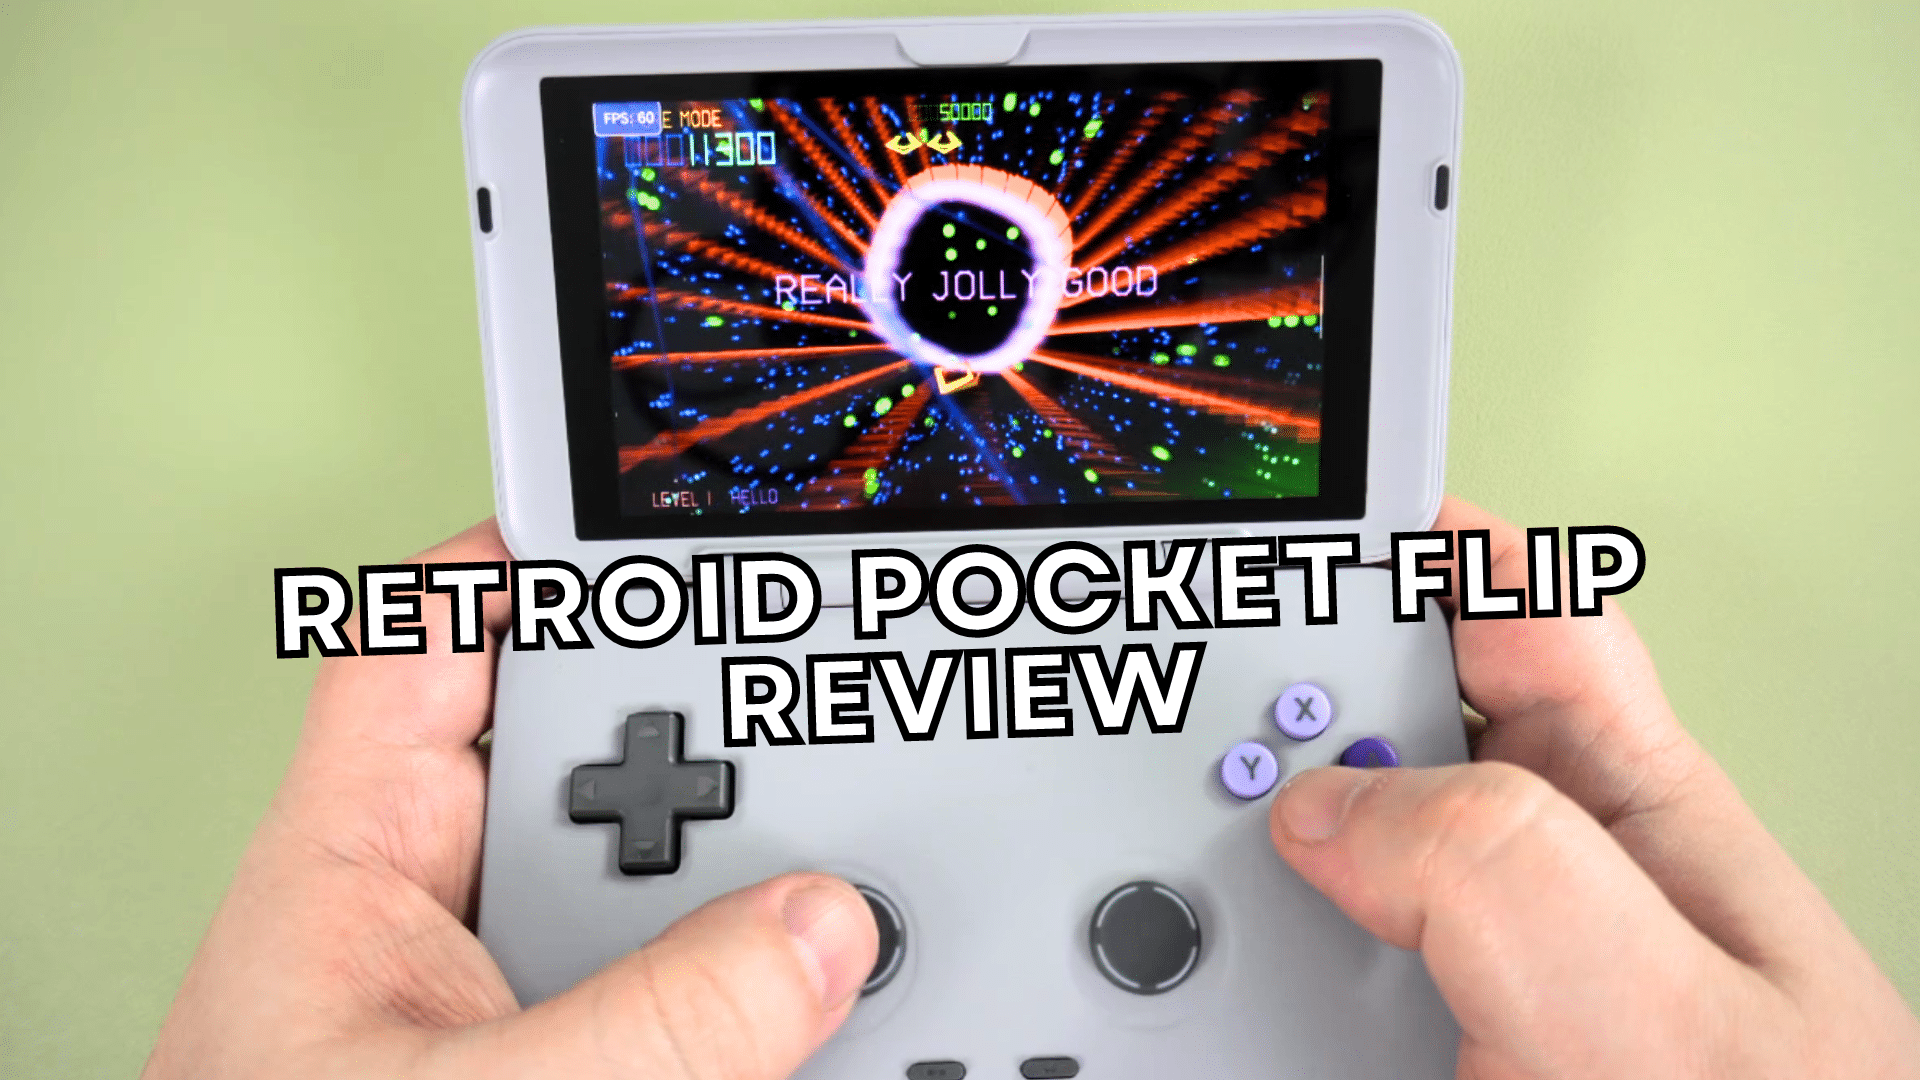 Retroid Pocket 2S | DroiX Global